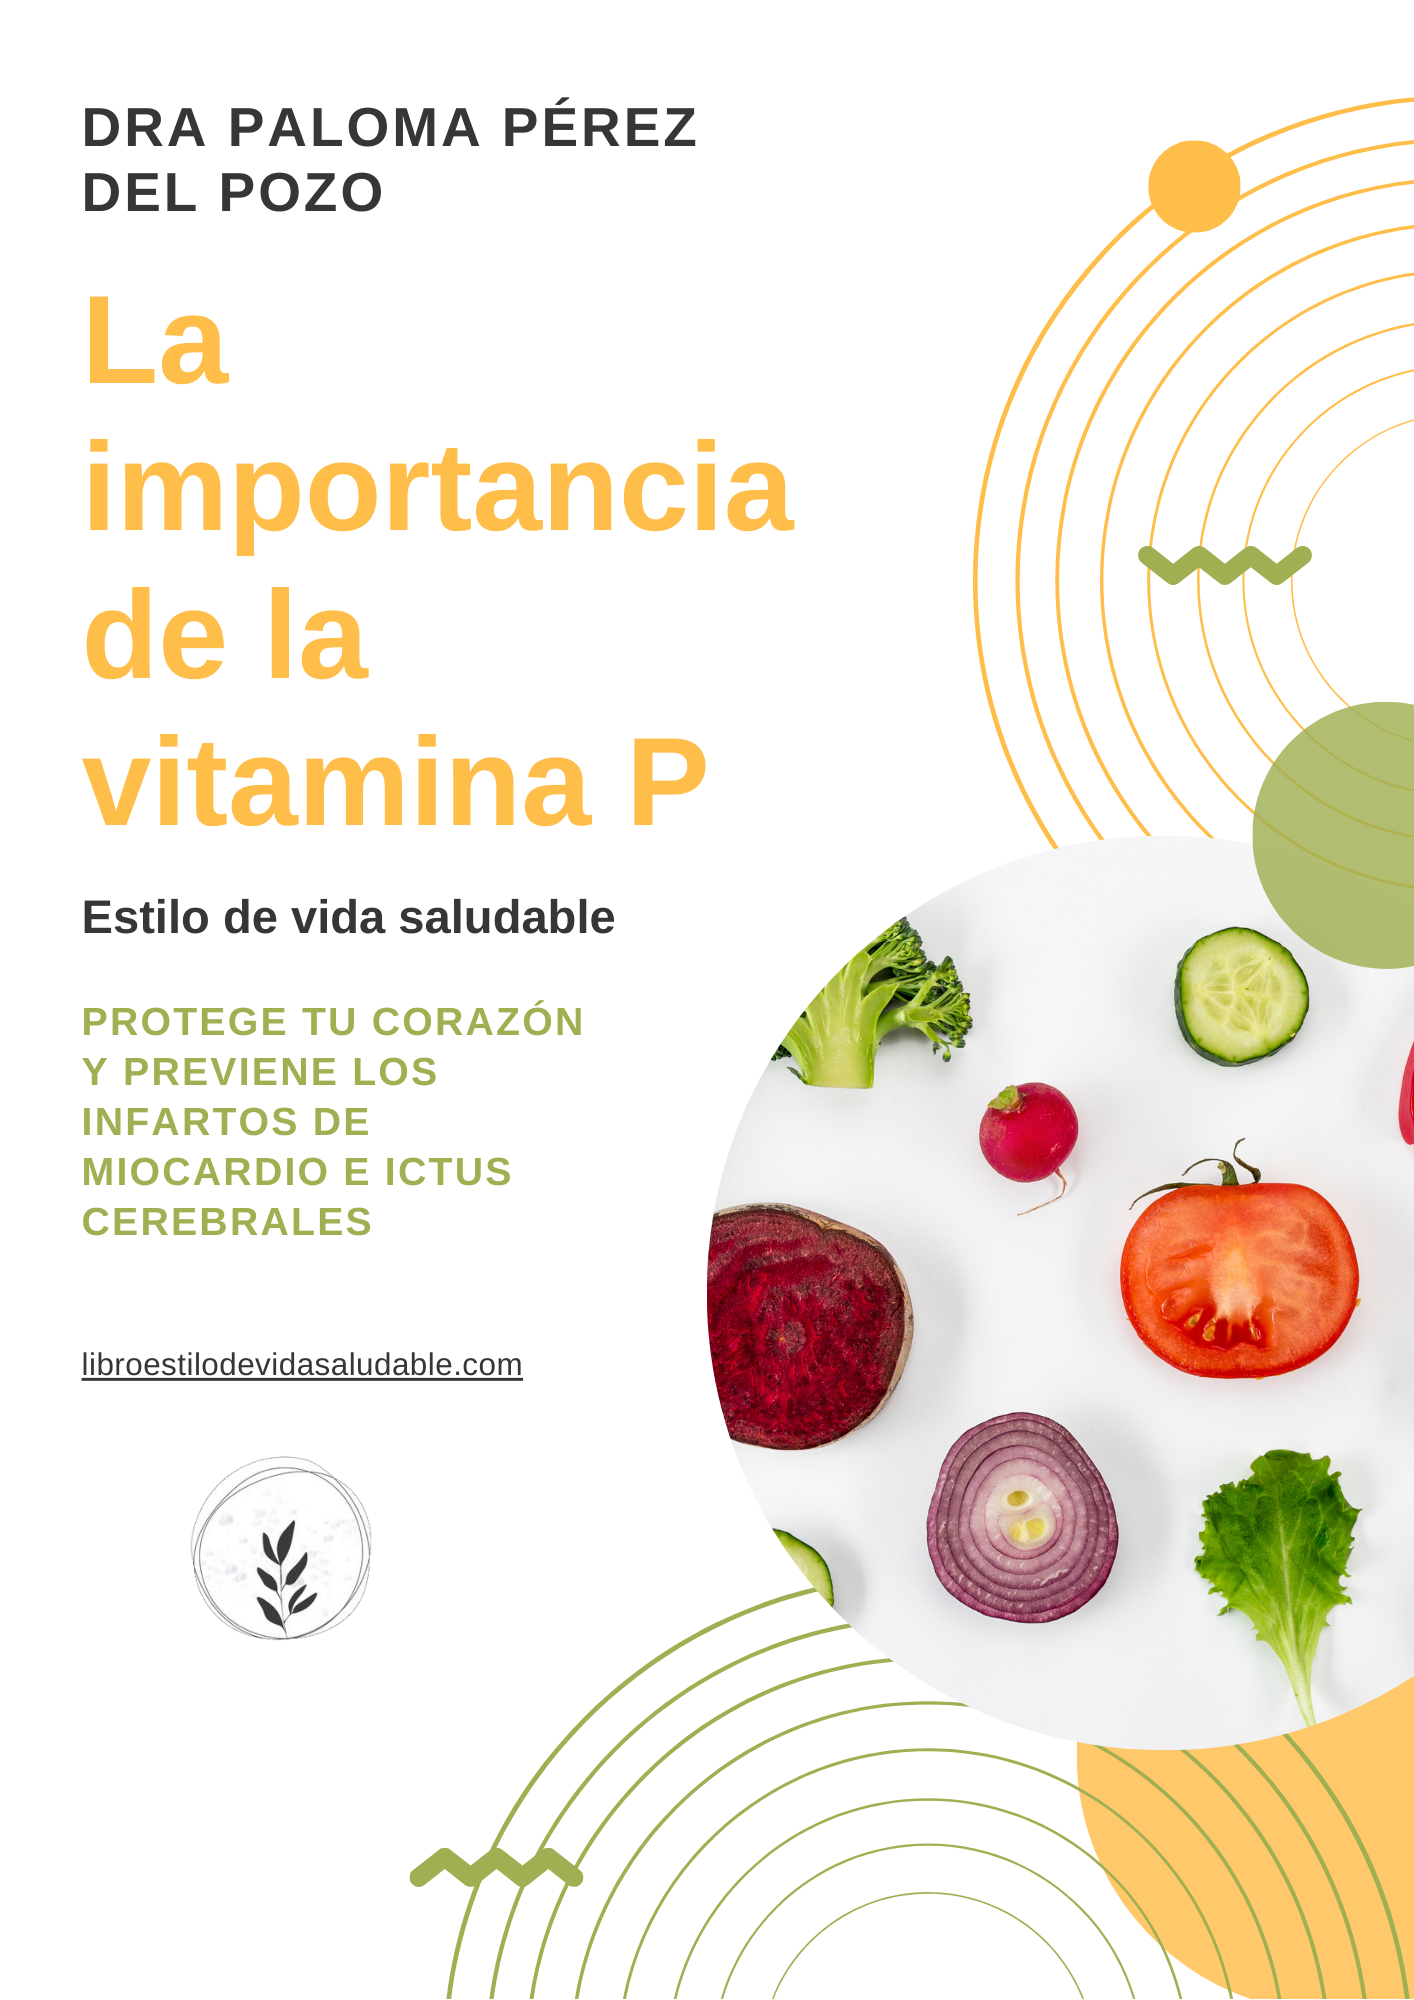 La importancia de la vitamina P